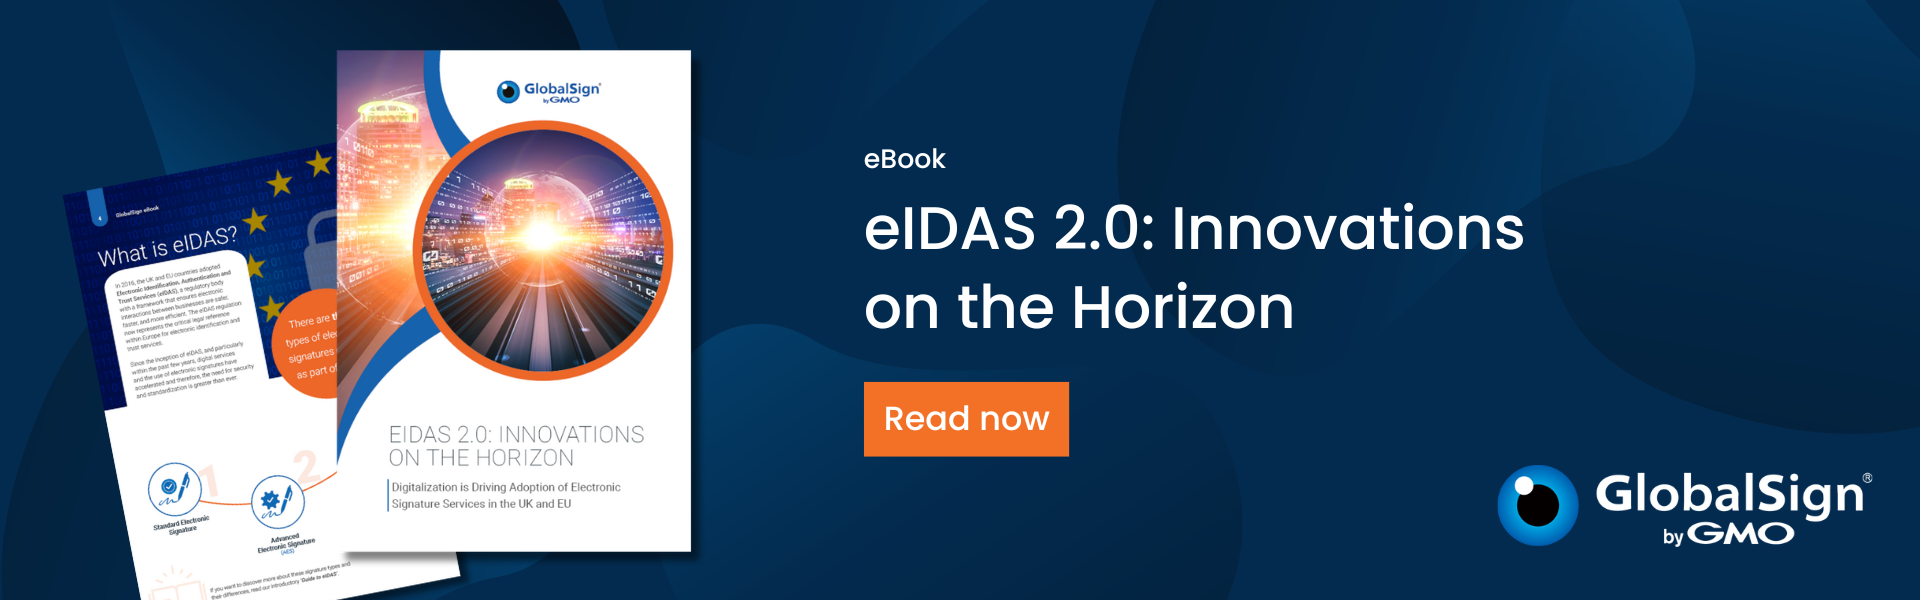 eIDAS 2.0 eBook promo image.png